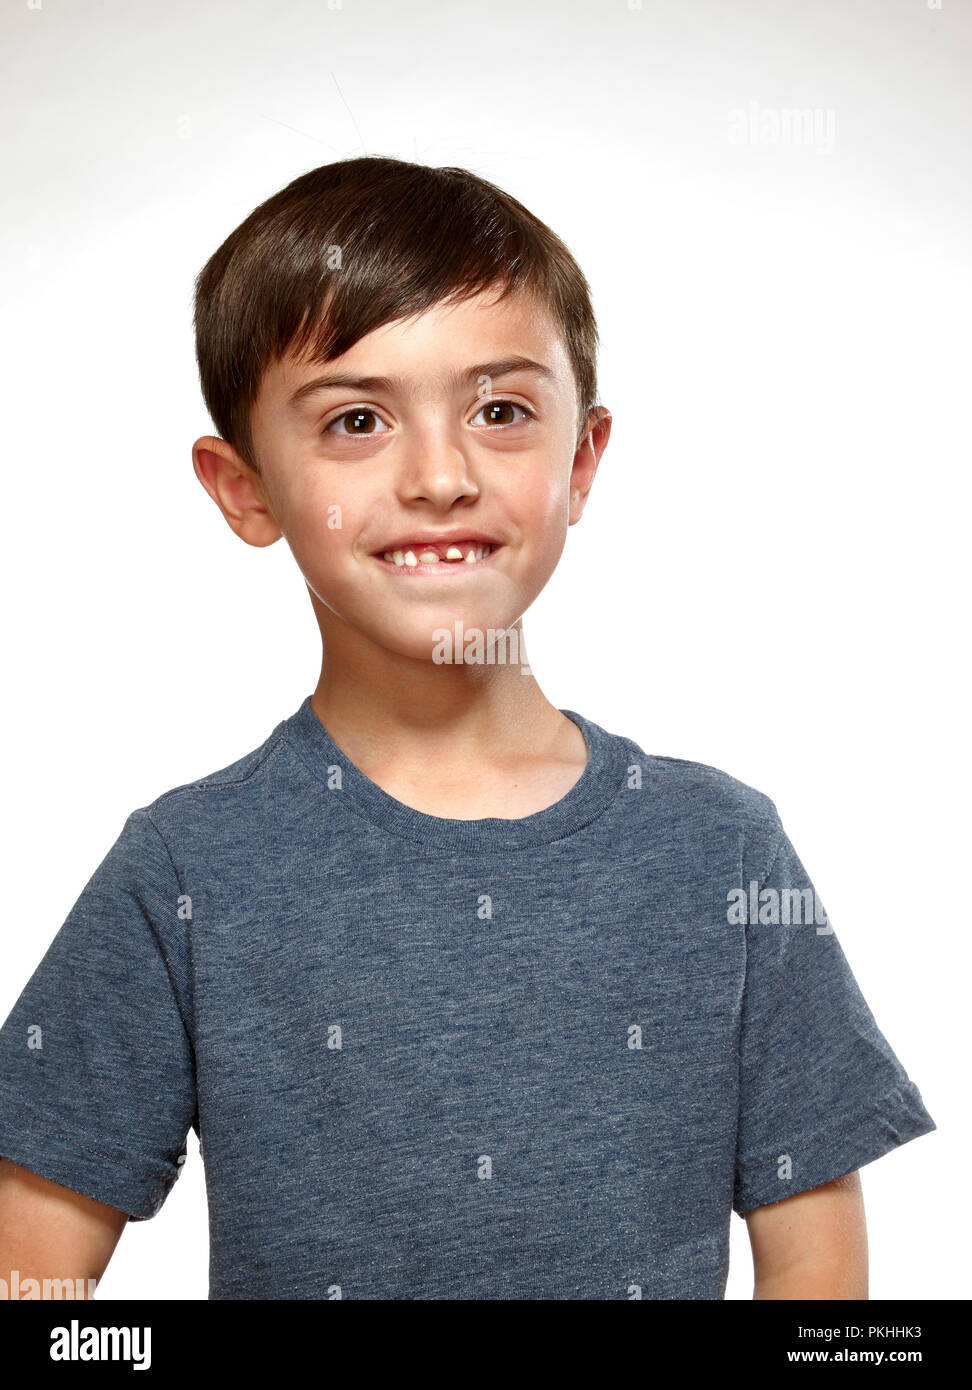 young boy with bad teeth Stock Photo